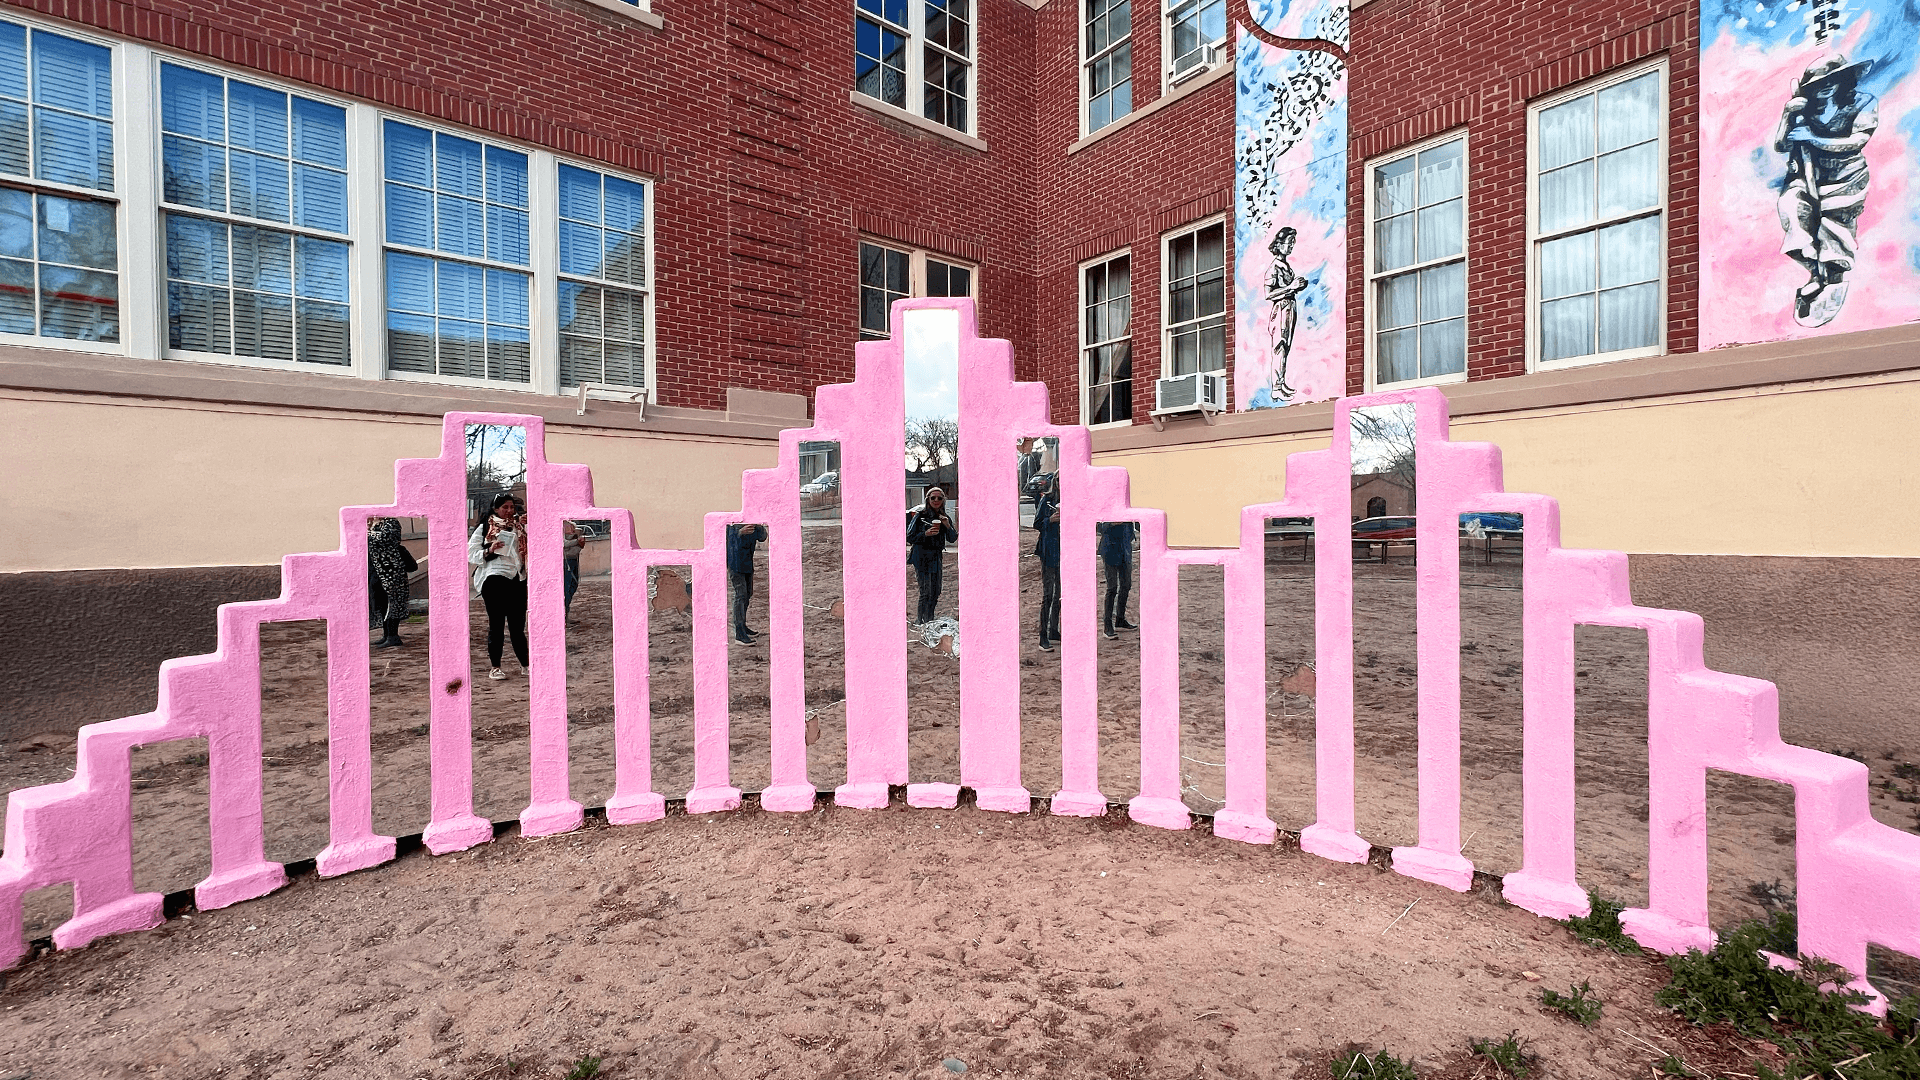 Pink public art in Lac Cruces, NM